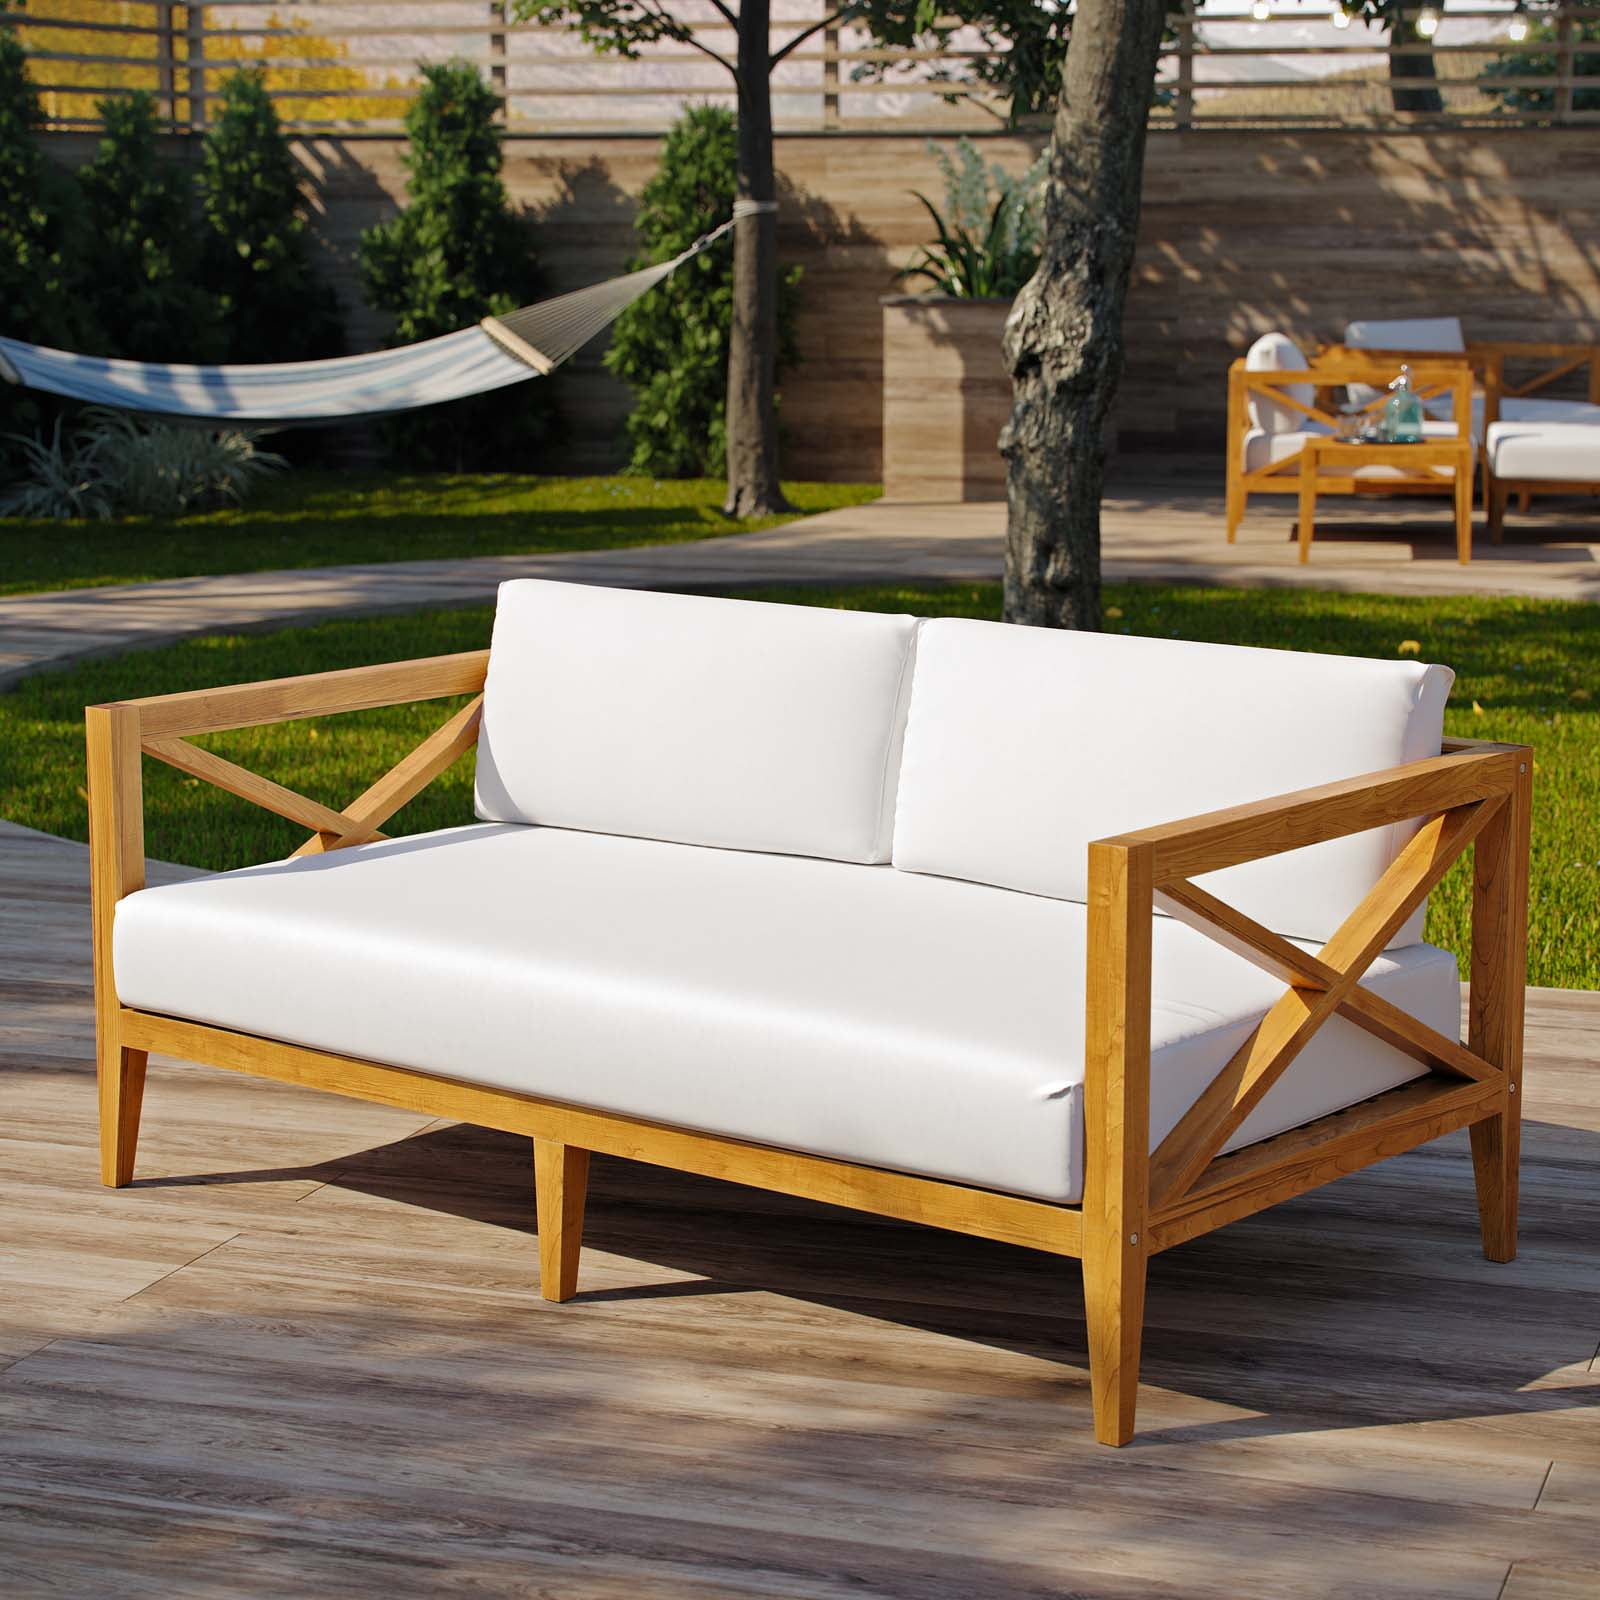 Upgrade Your Outdoor Decor With Premium Teak Outdoor Furniture